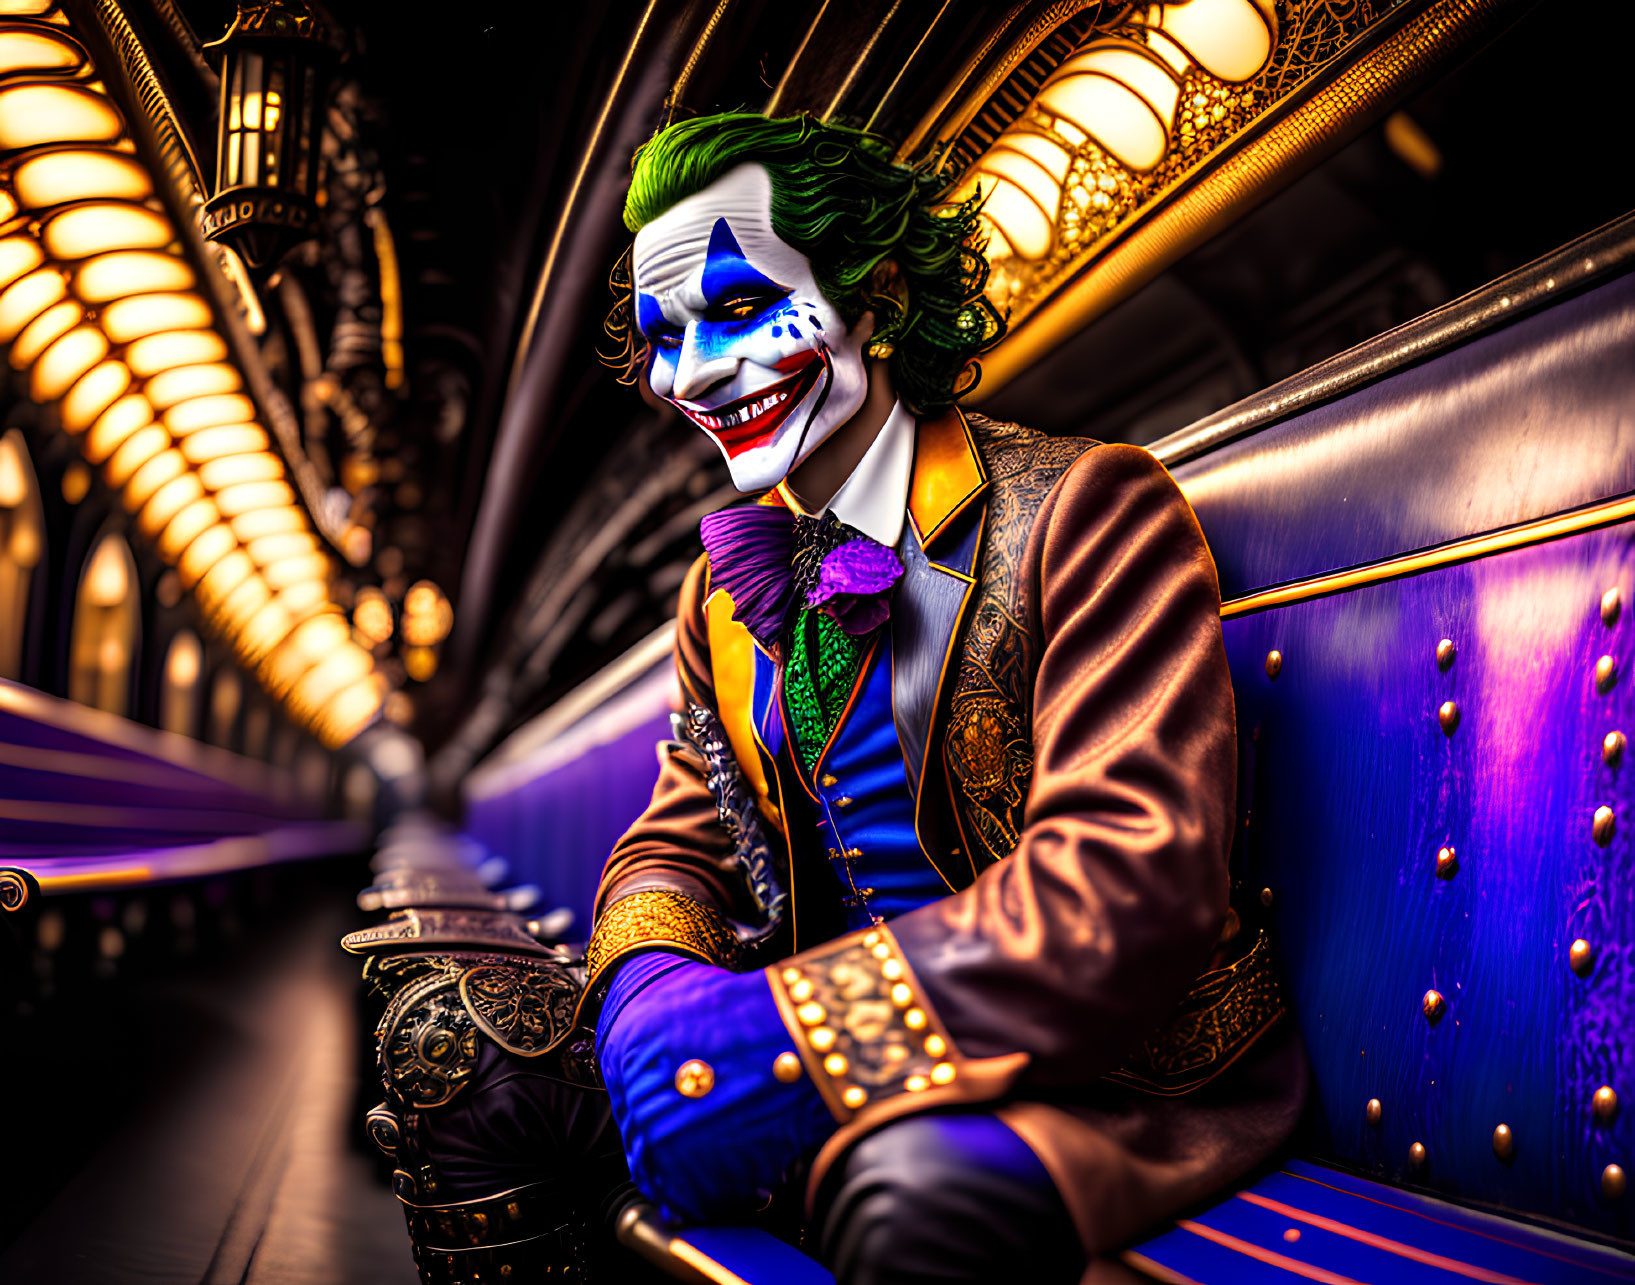 Elaborate Joker Costume in Richly Colored Interior